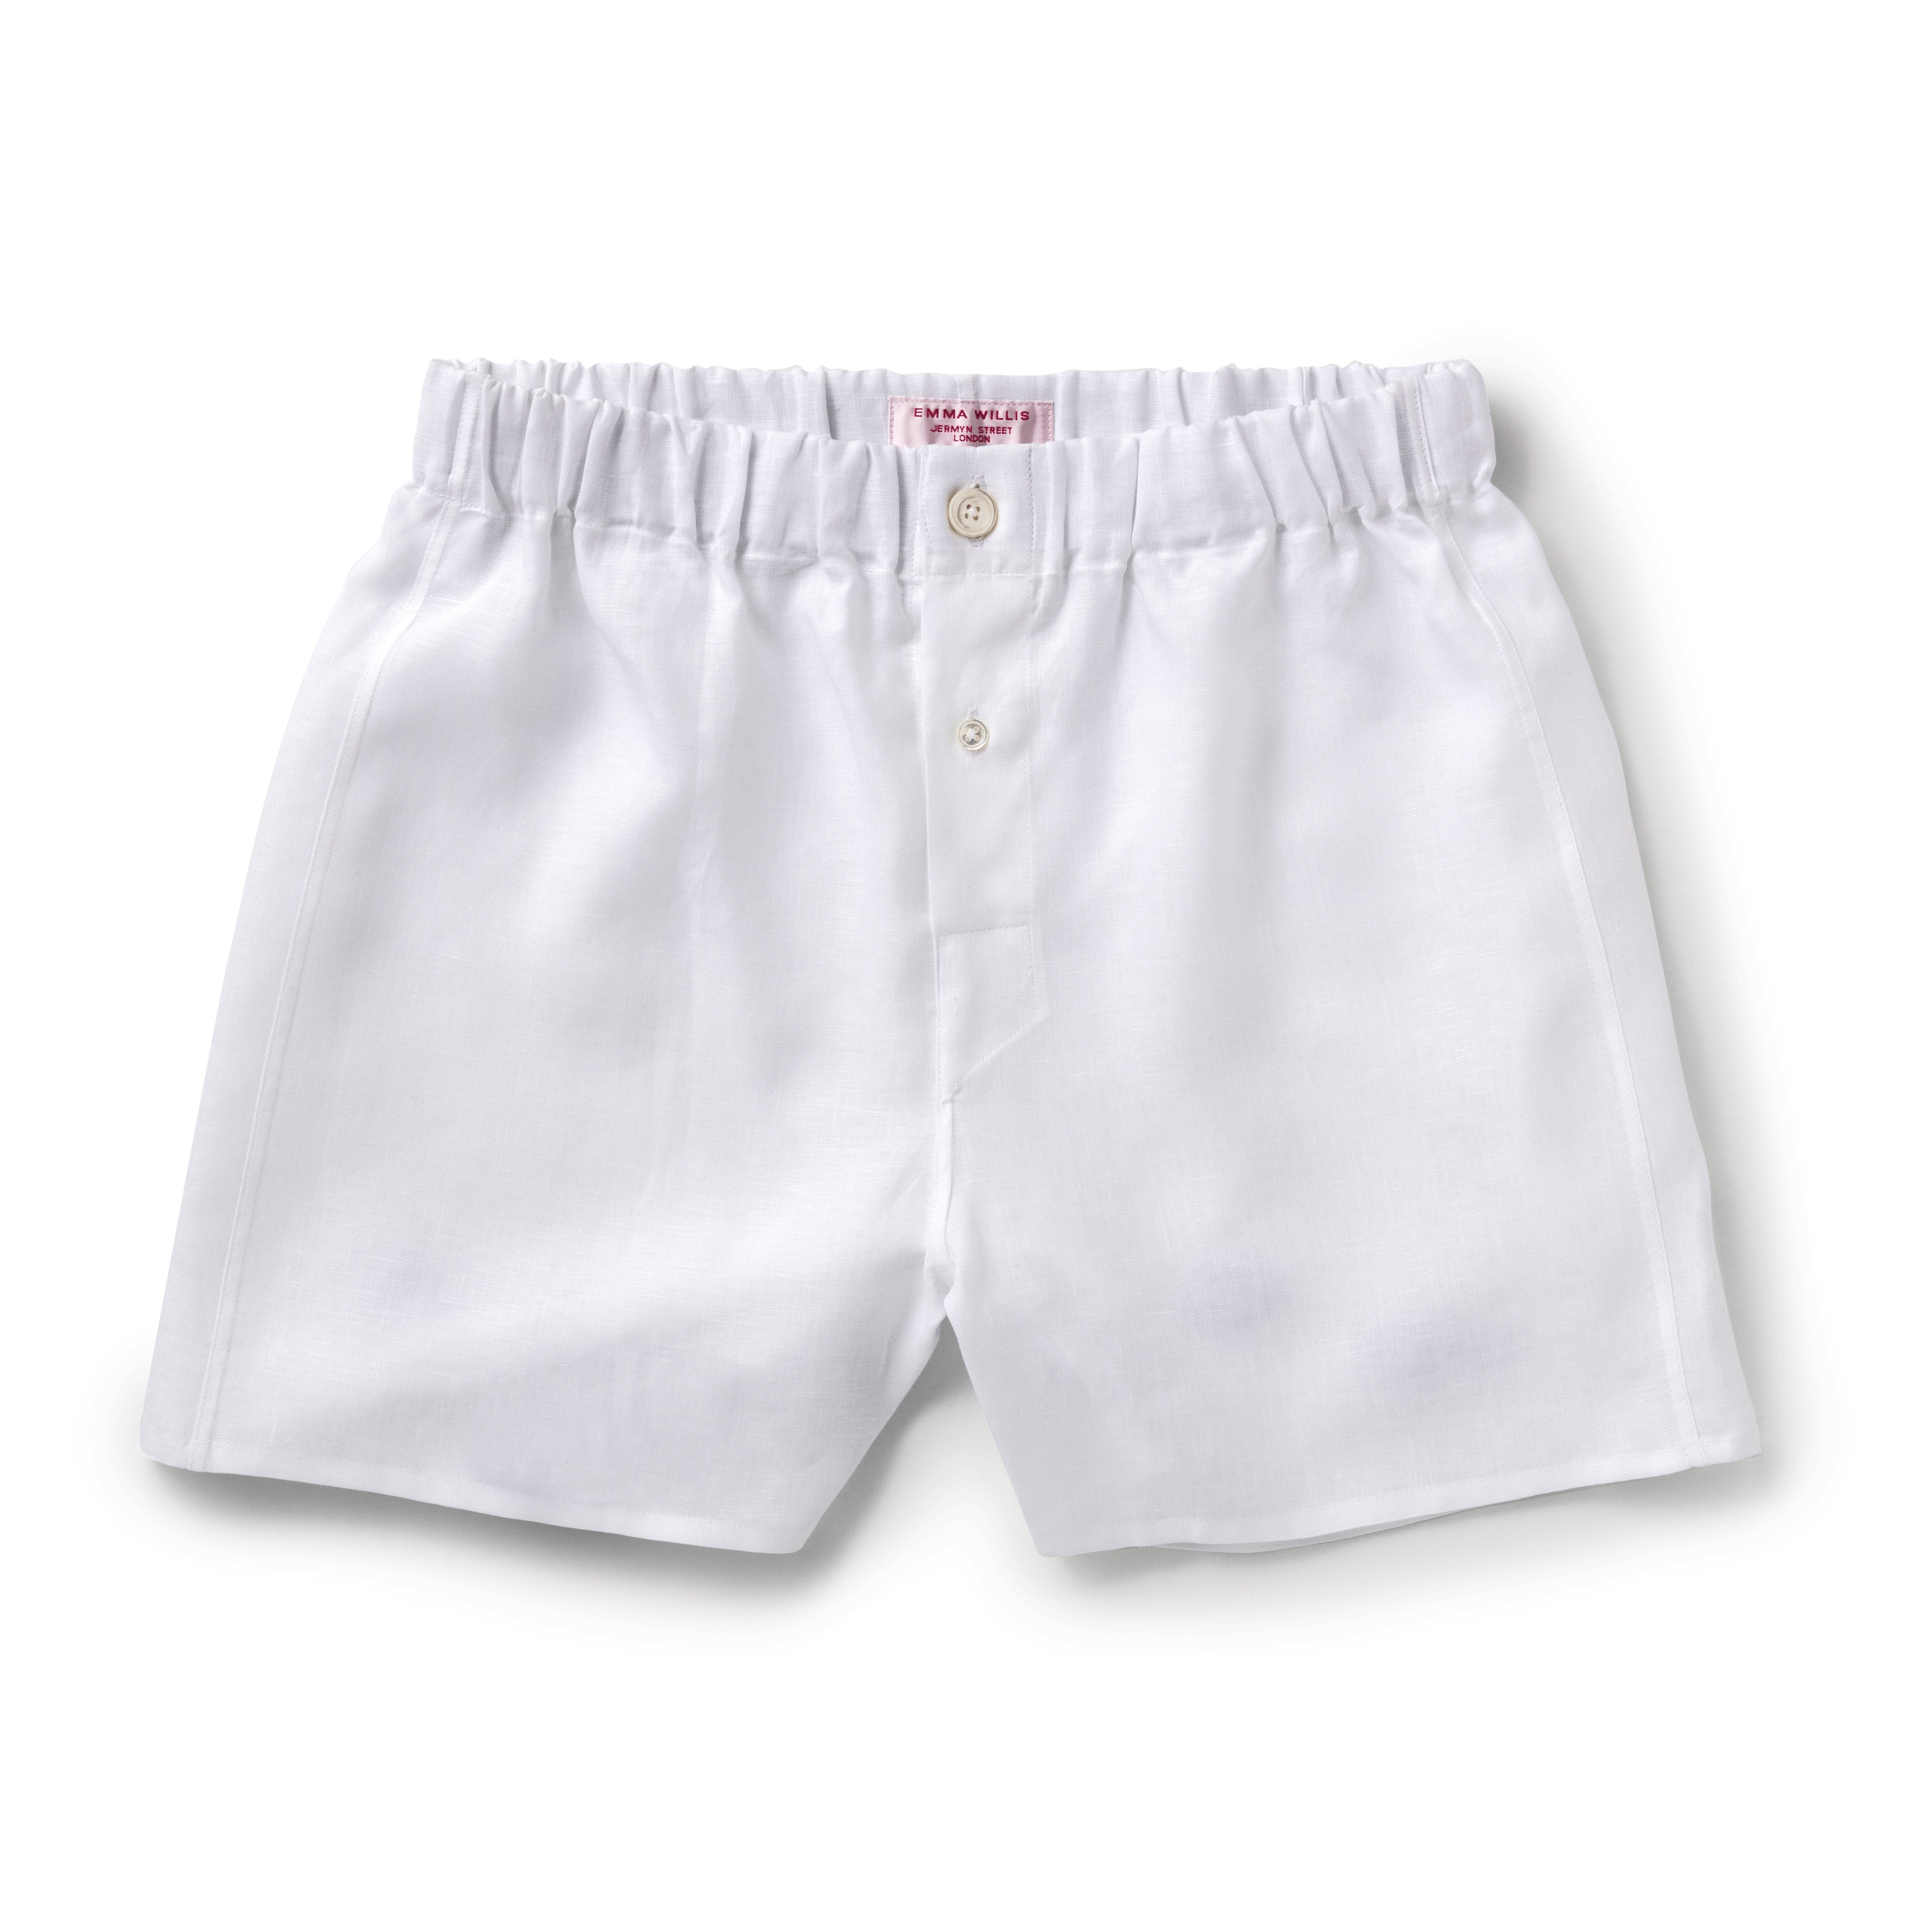 White Linen Slim Fit Boxer Shorts - Emma Willis